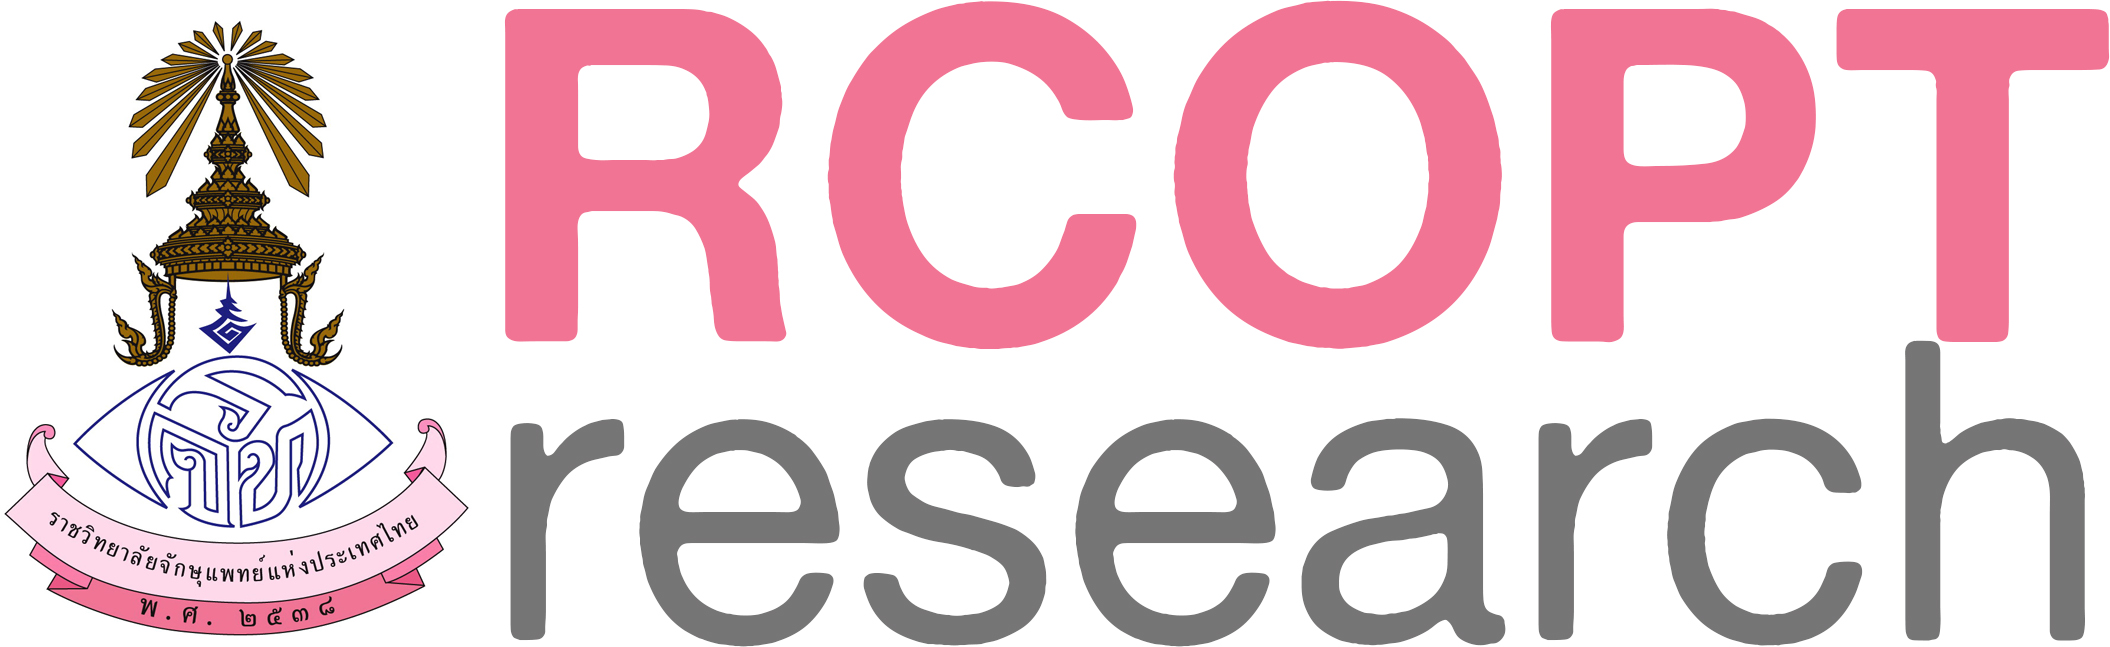 2070RCOPT research logo1.jpg